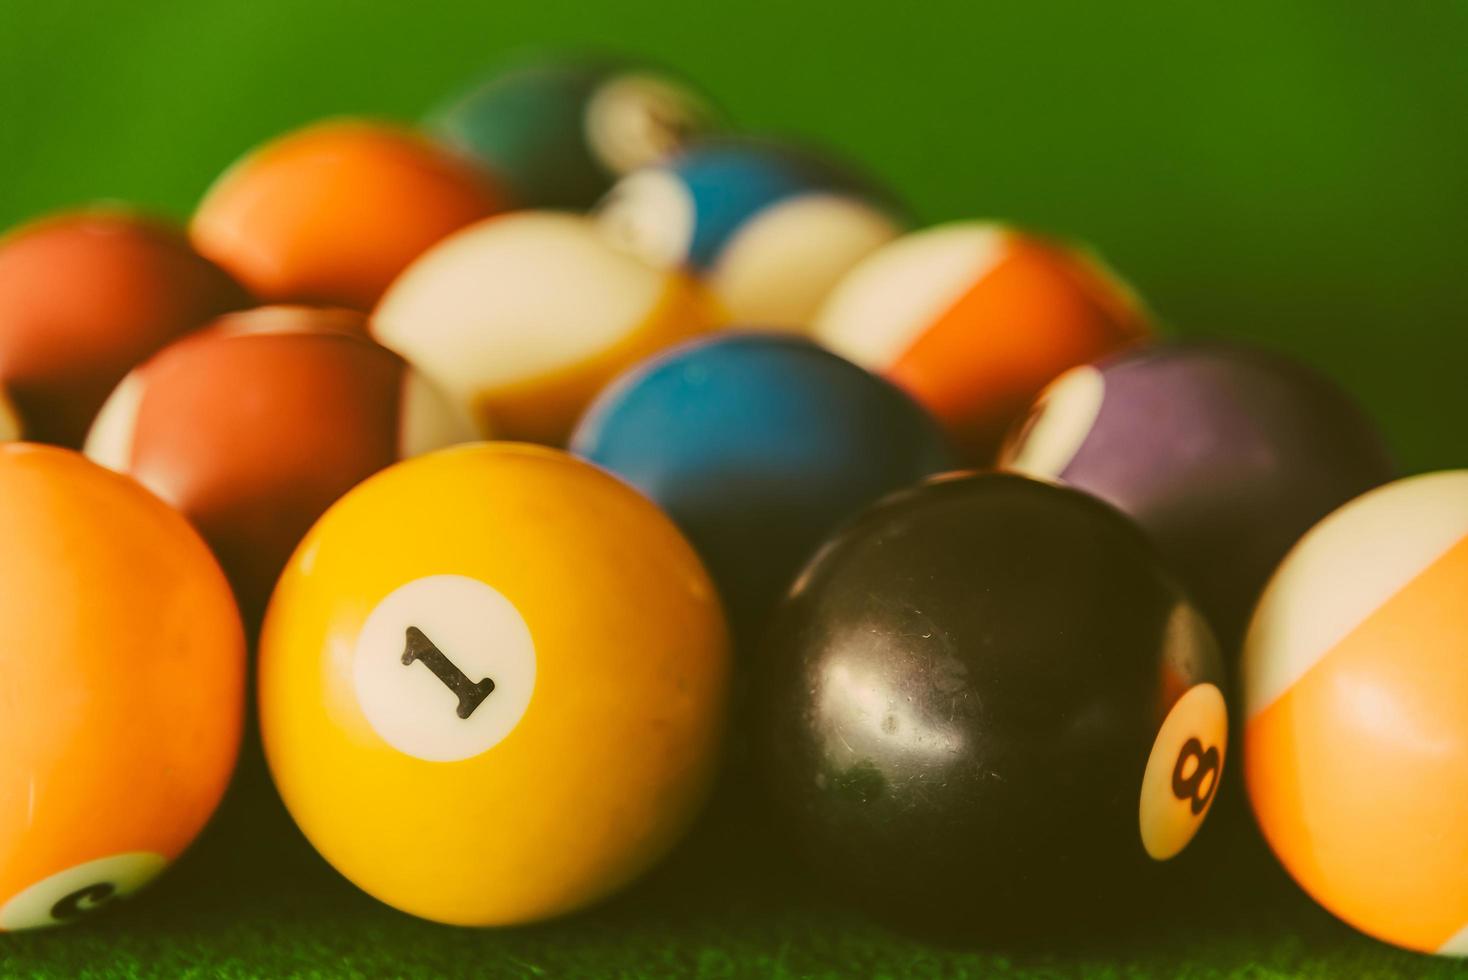 Billiards balls close-up photo